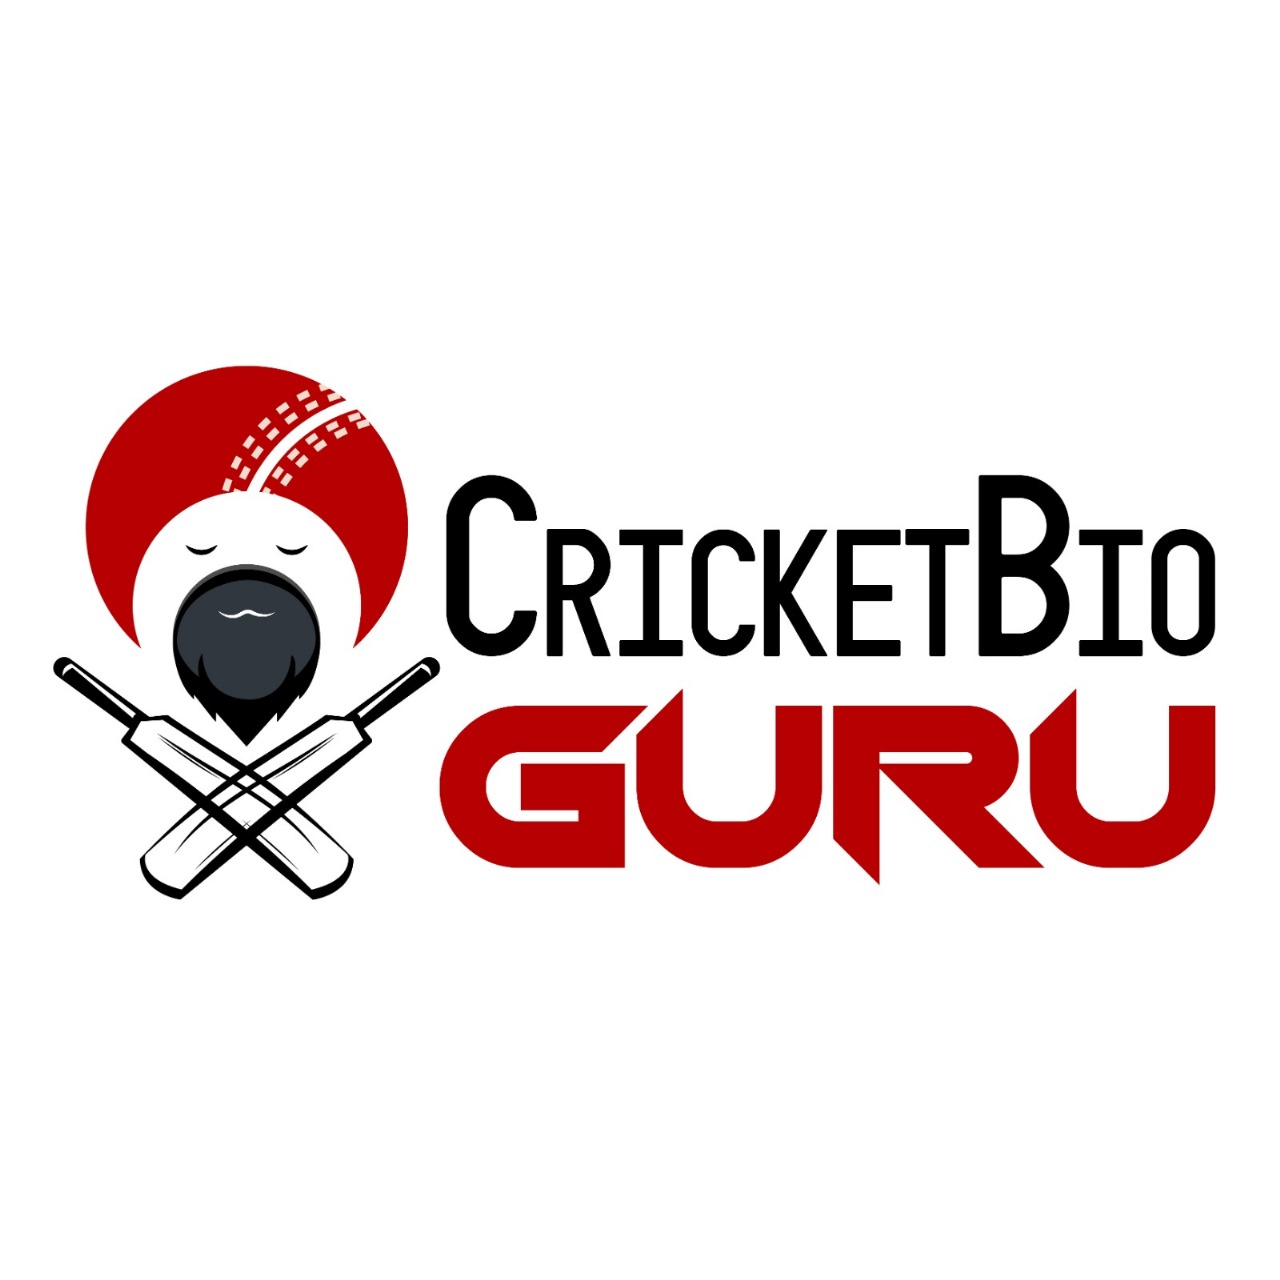 cricket-bio-guru-logo-us-tech-zone